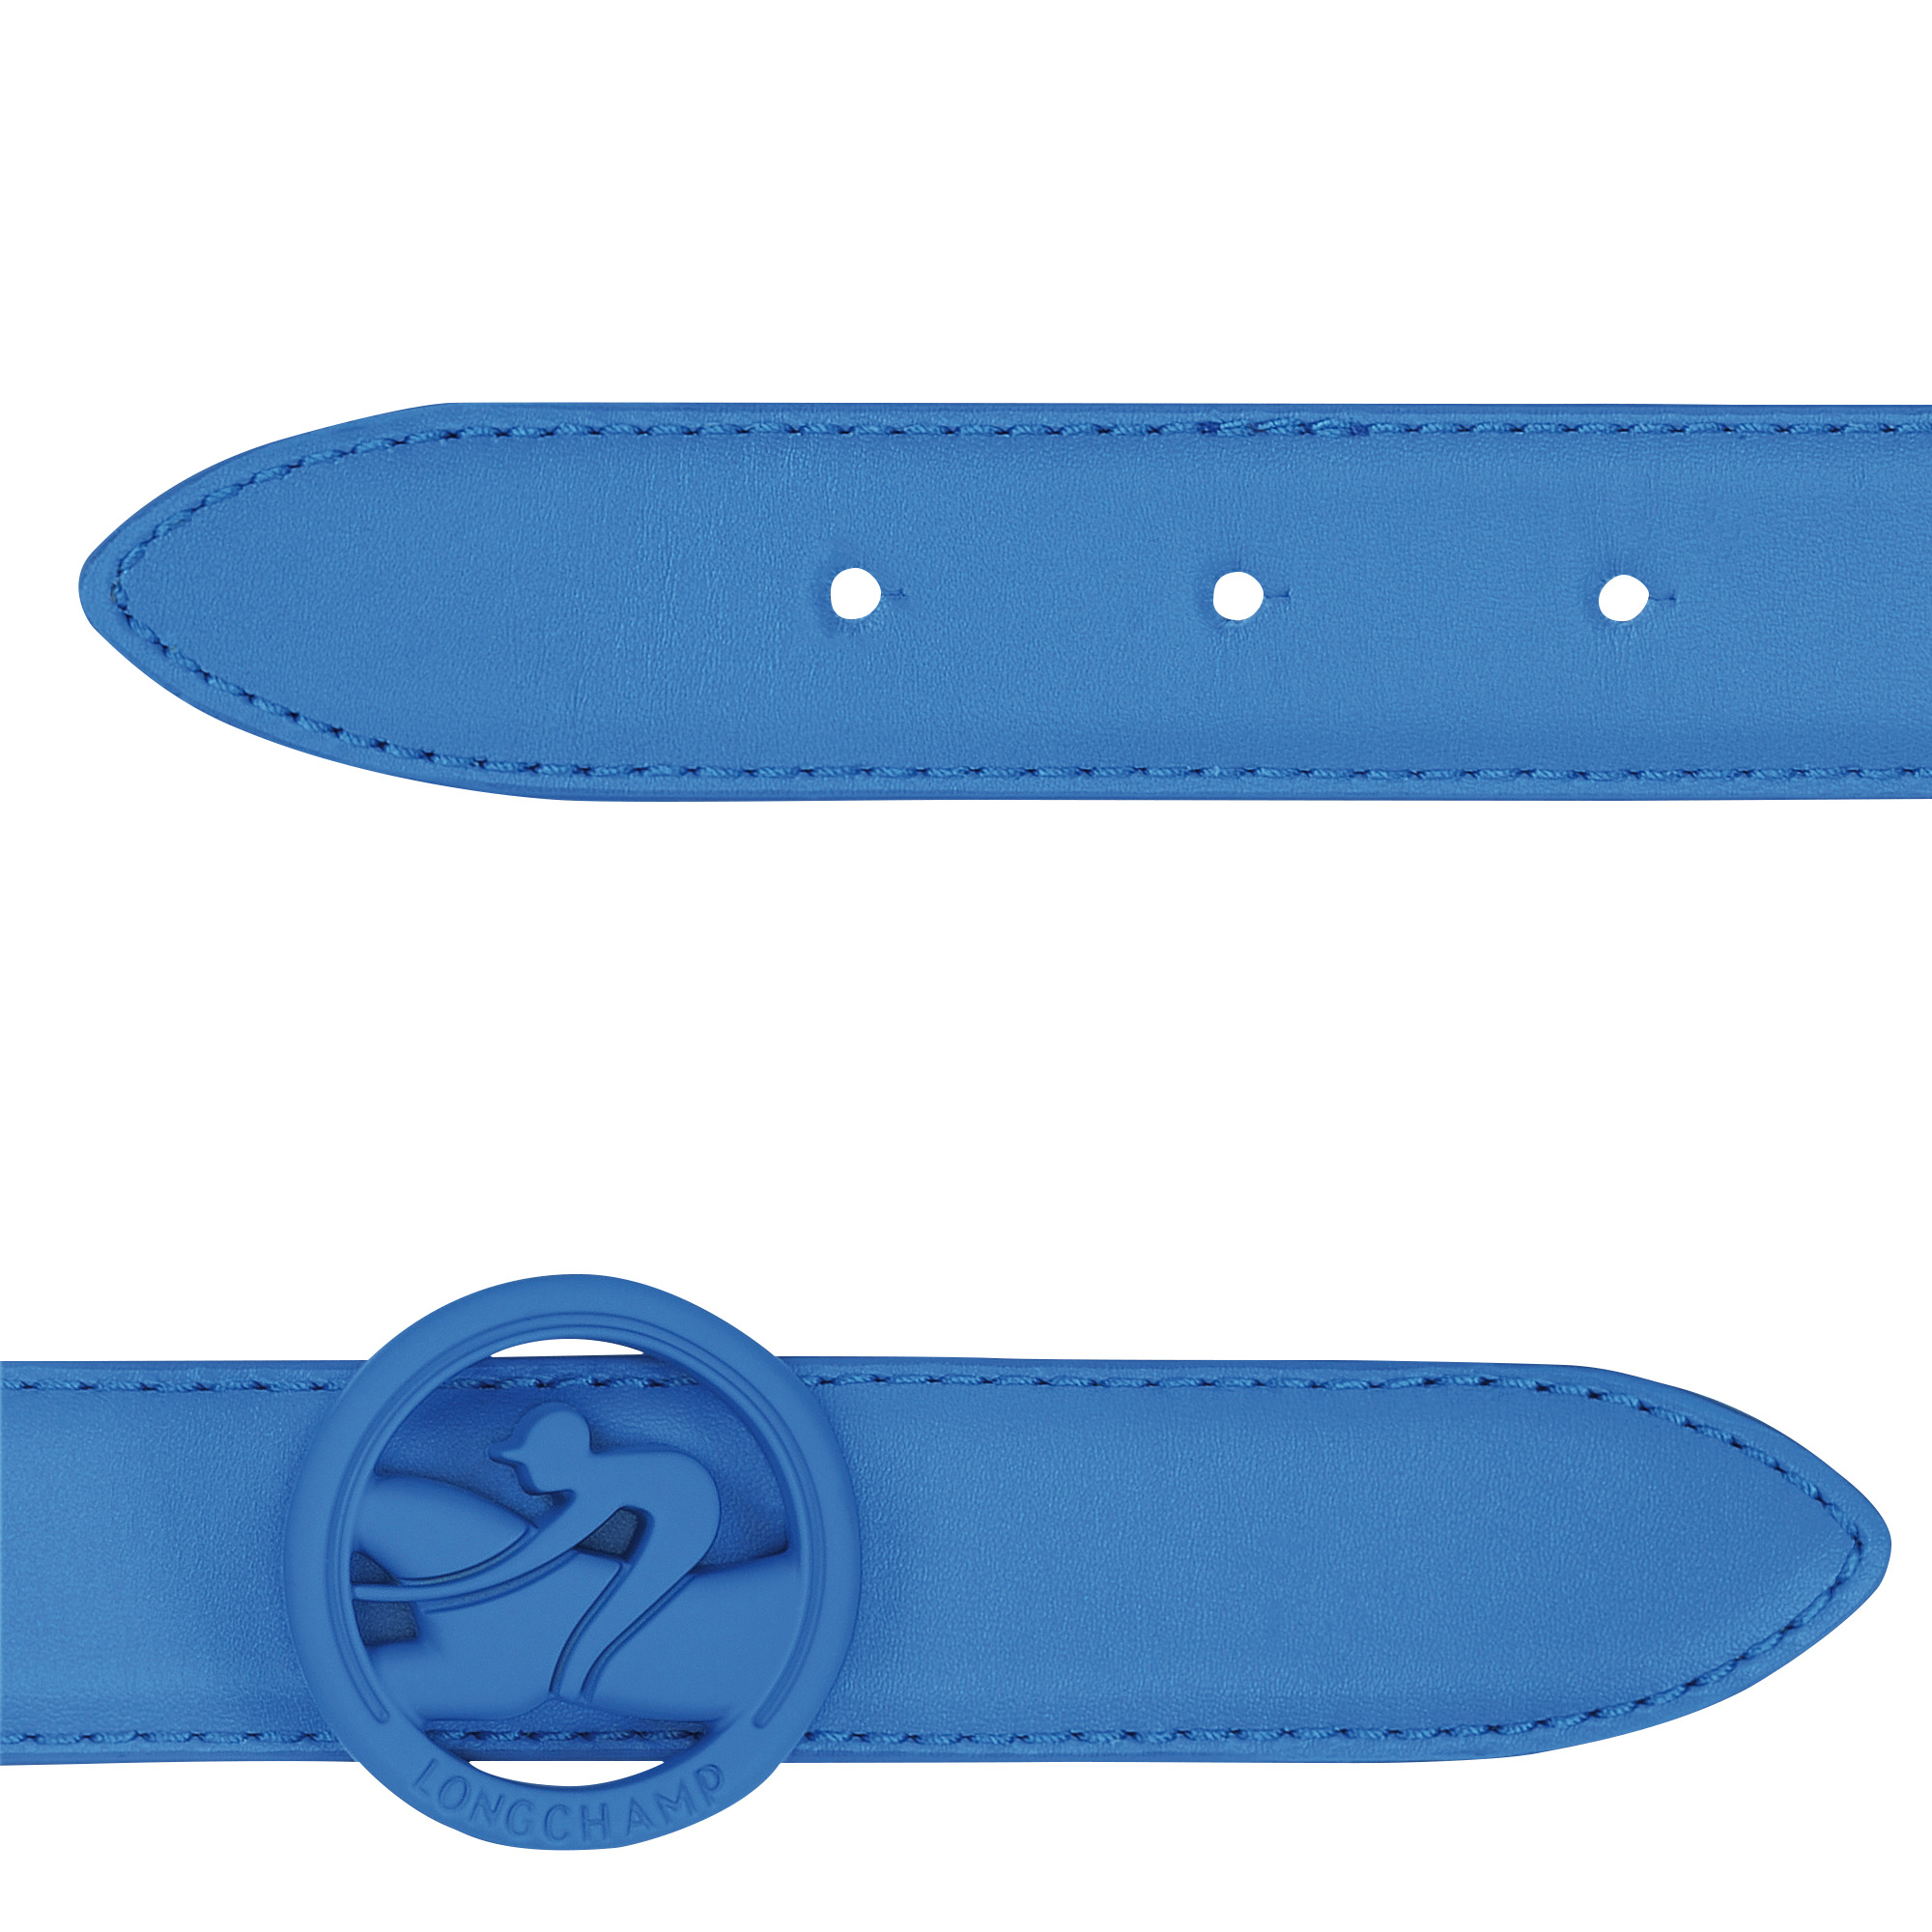 Box-Trot Ladies' belt Cobalt - Leather - 2